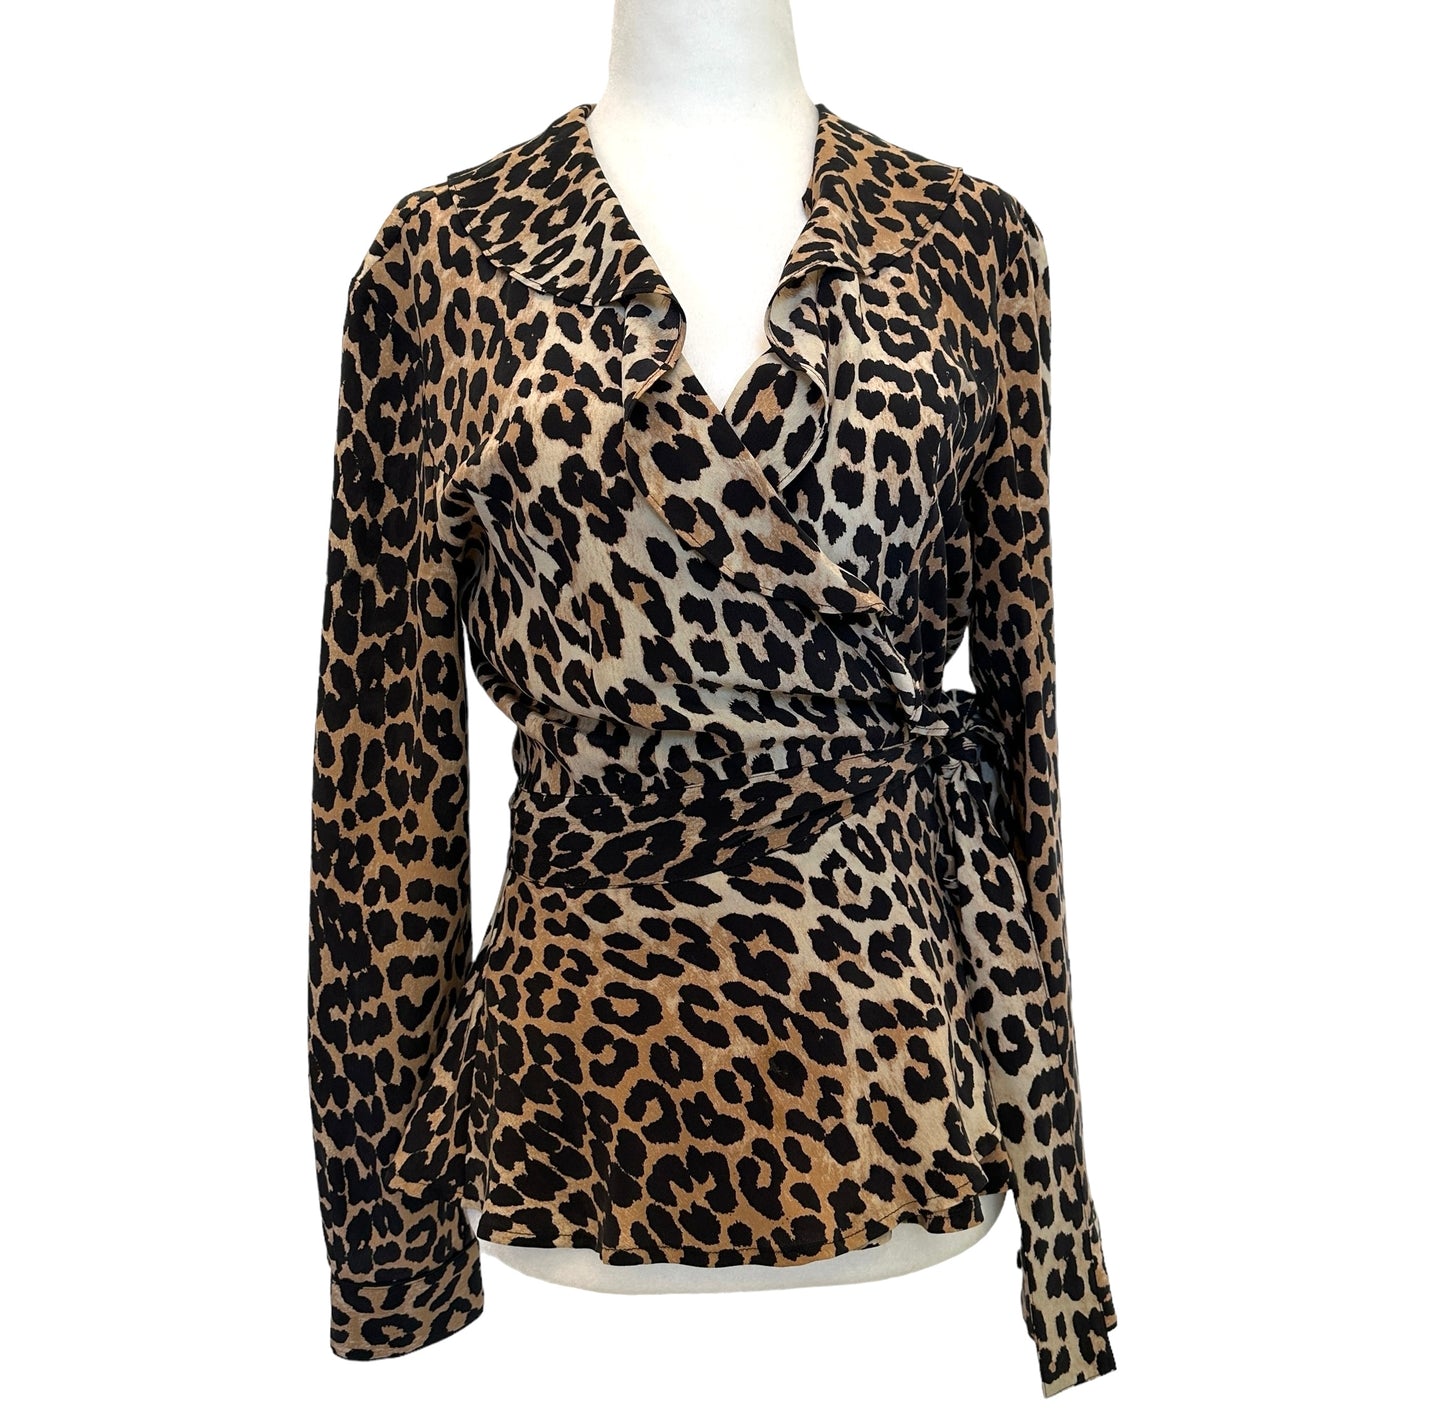 Leopard Shirt - S/M